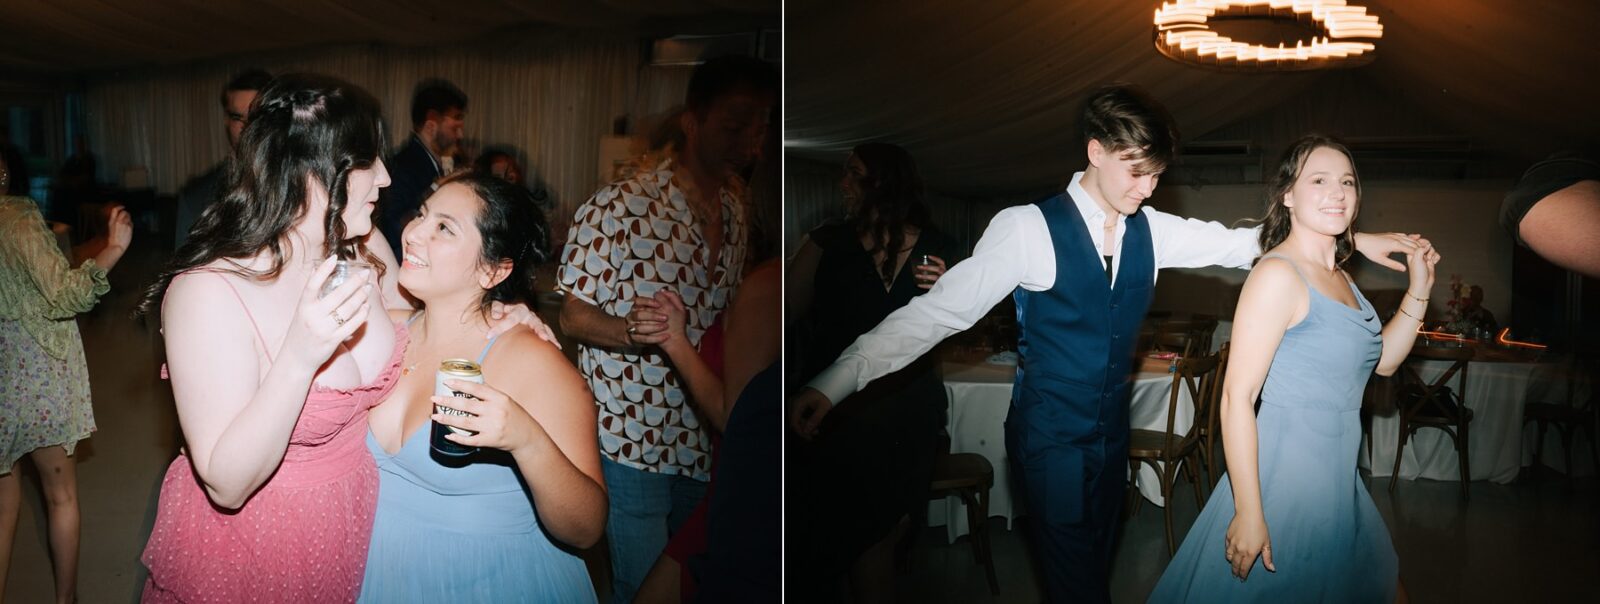 guests dancing at austin wedding reception